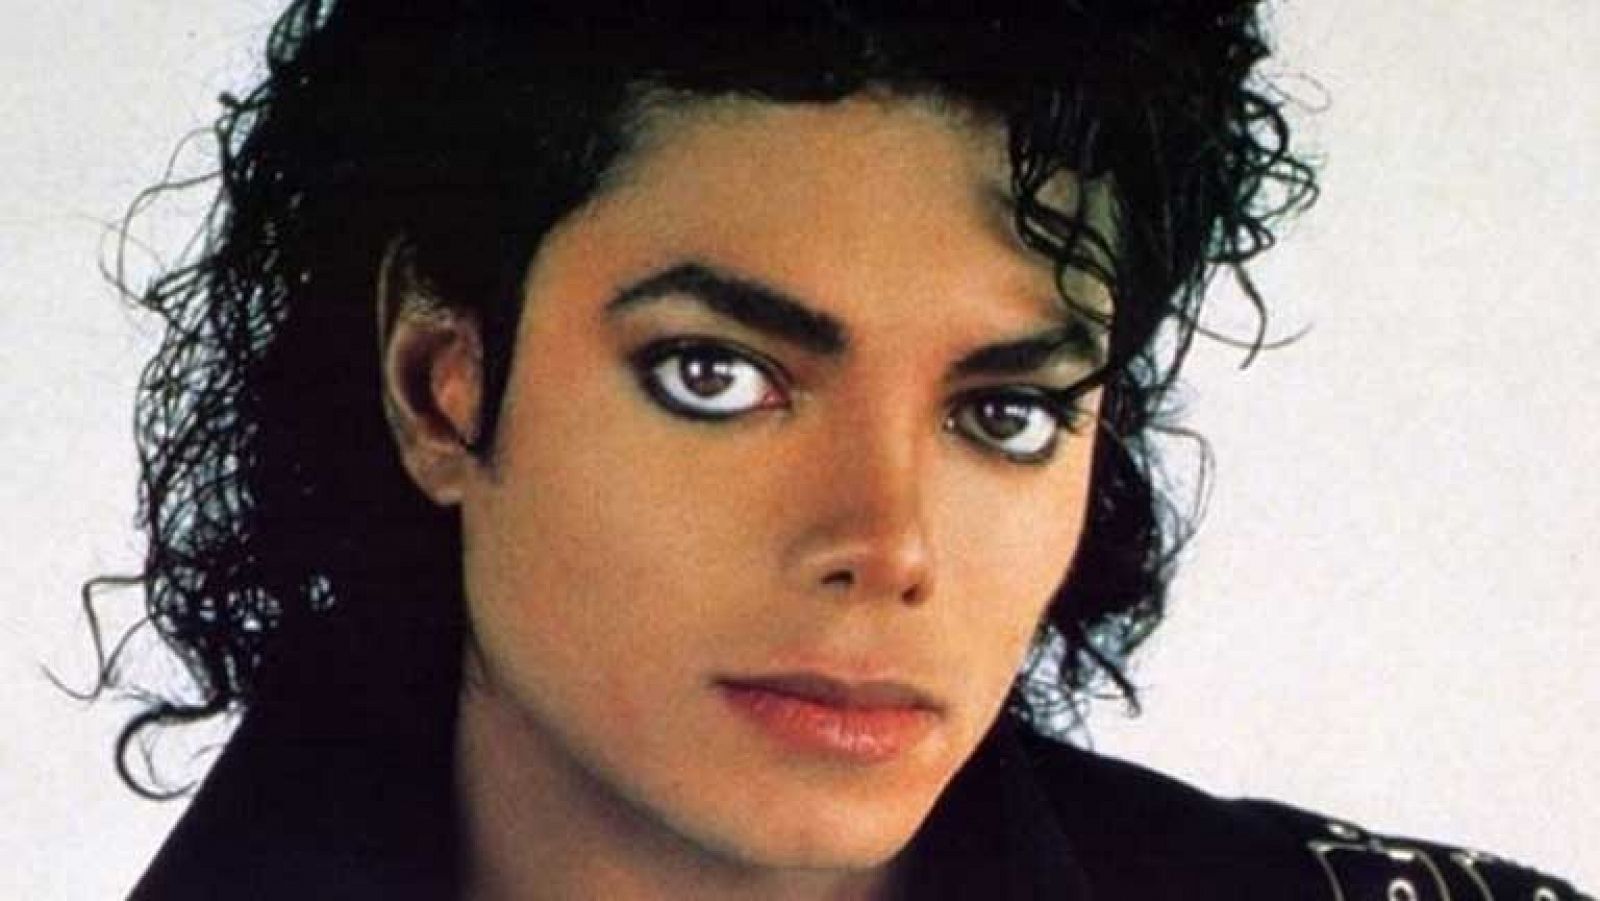 Telediario 1: Nuevo libro sobre Michael Jackson | RTVE Play